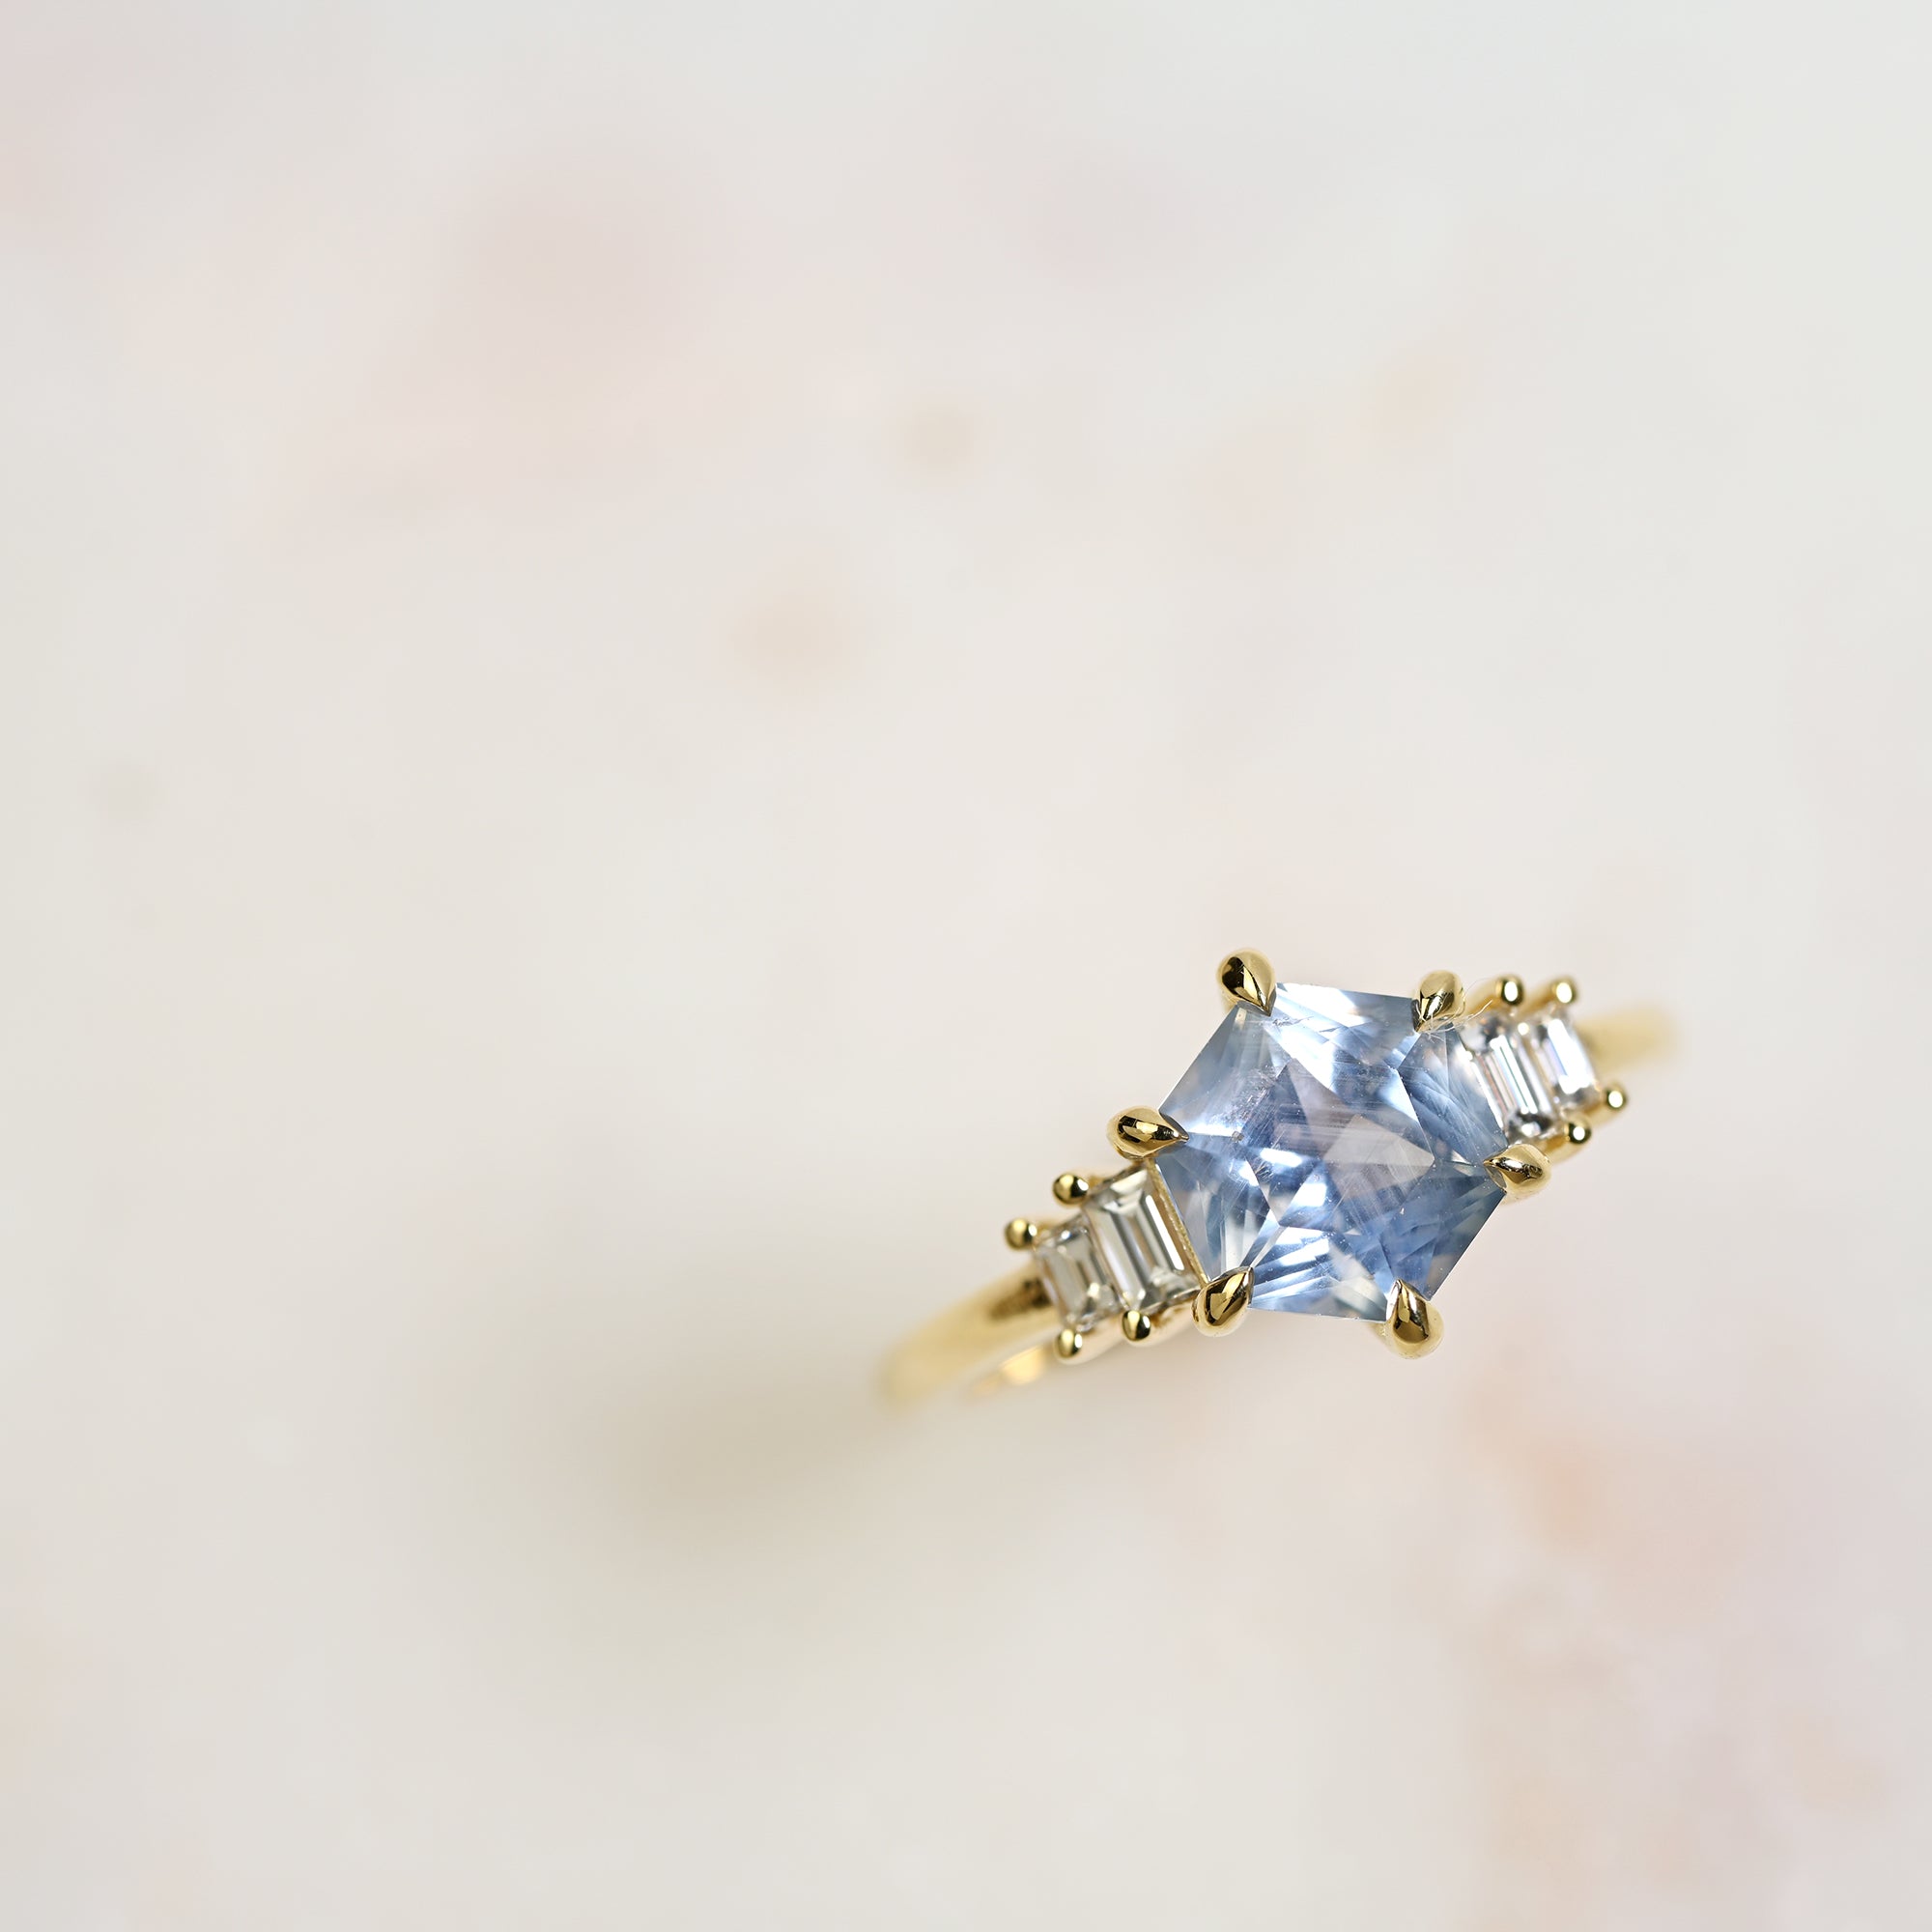 Light blue Montana hexagon sapphire engagement ring with baguette diamonds set in 14k yellow gold